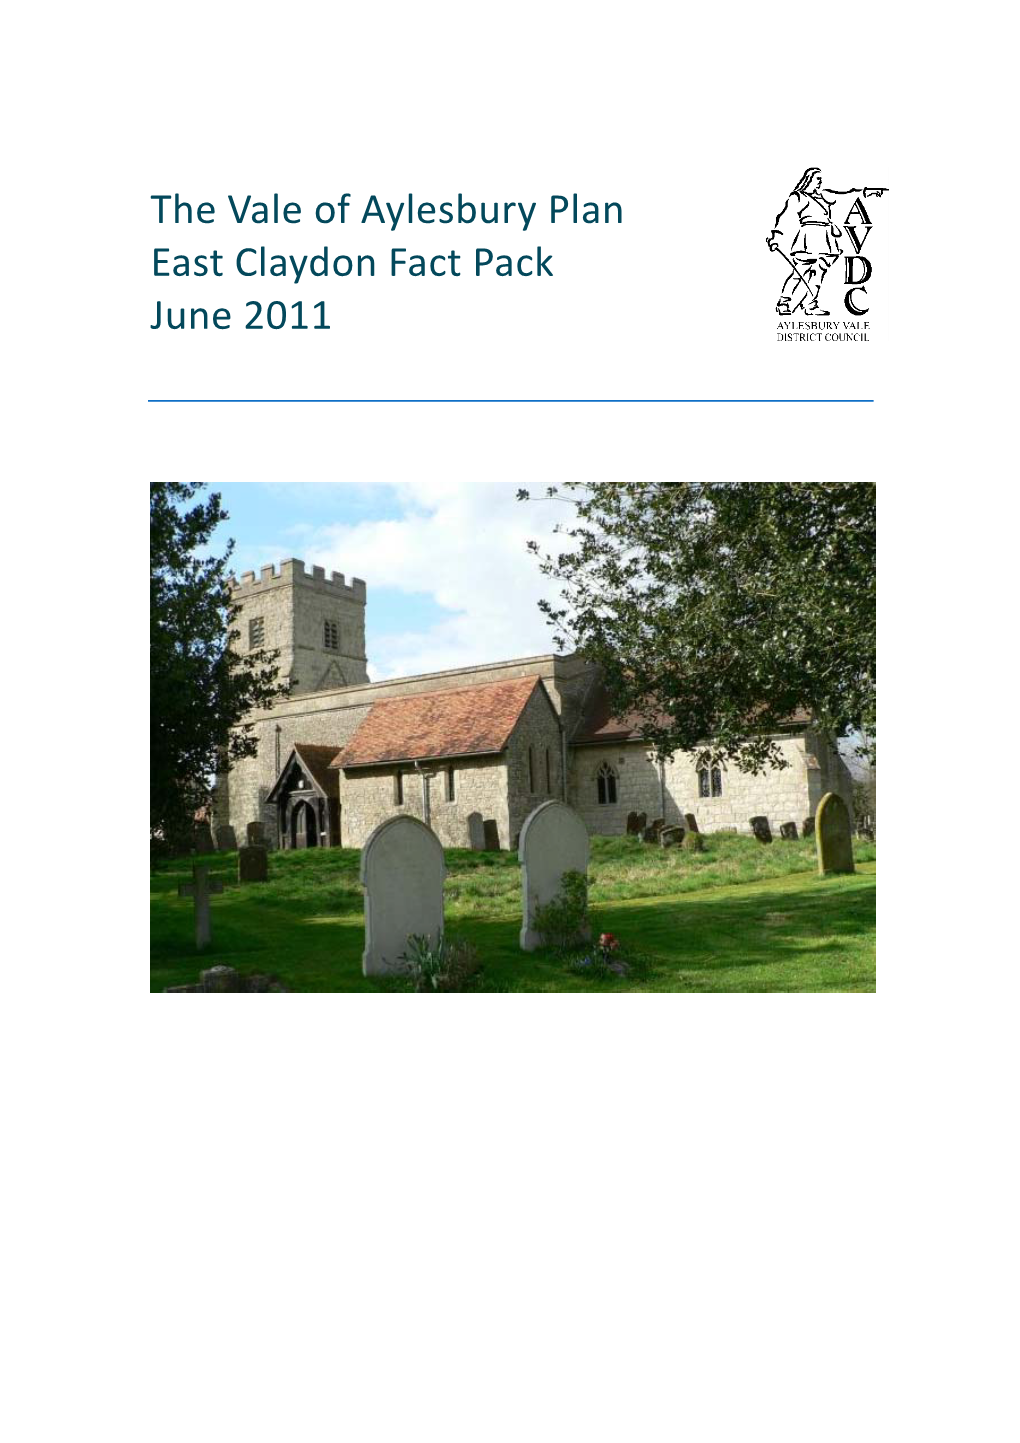 East Claydon Fact Pack June 2011